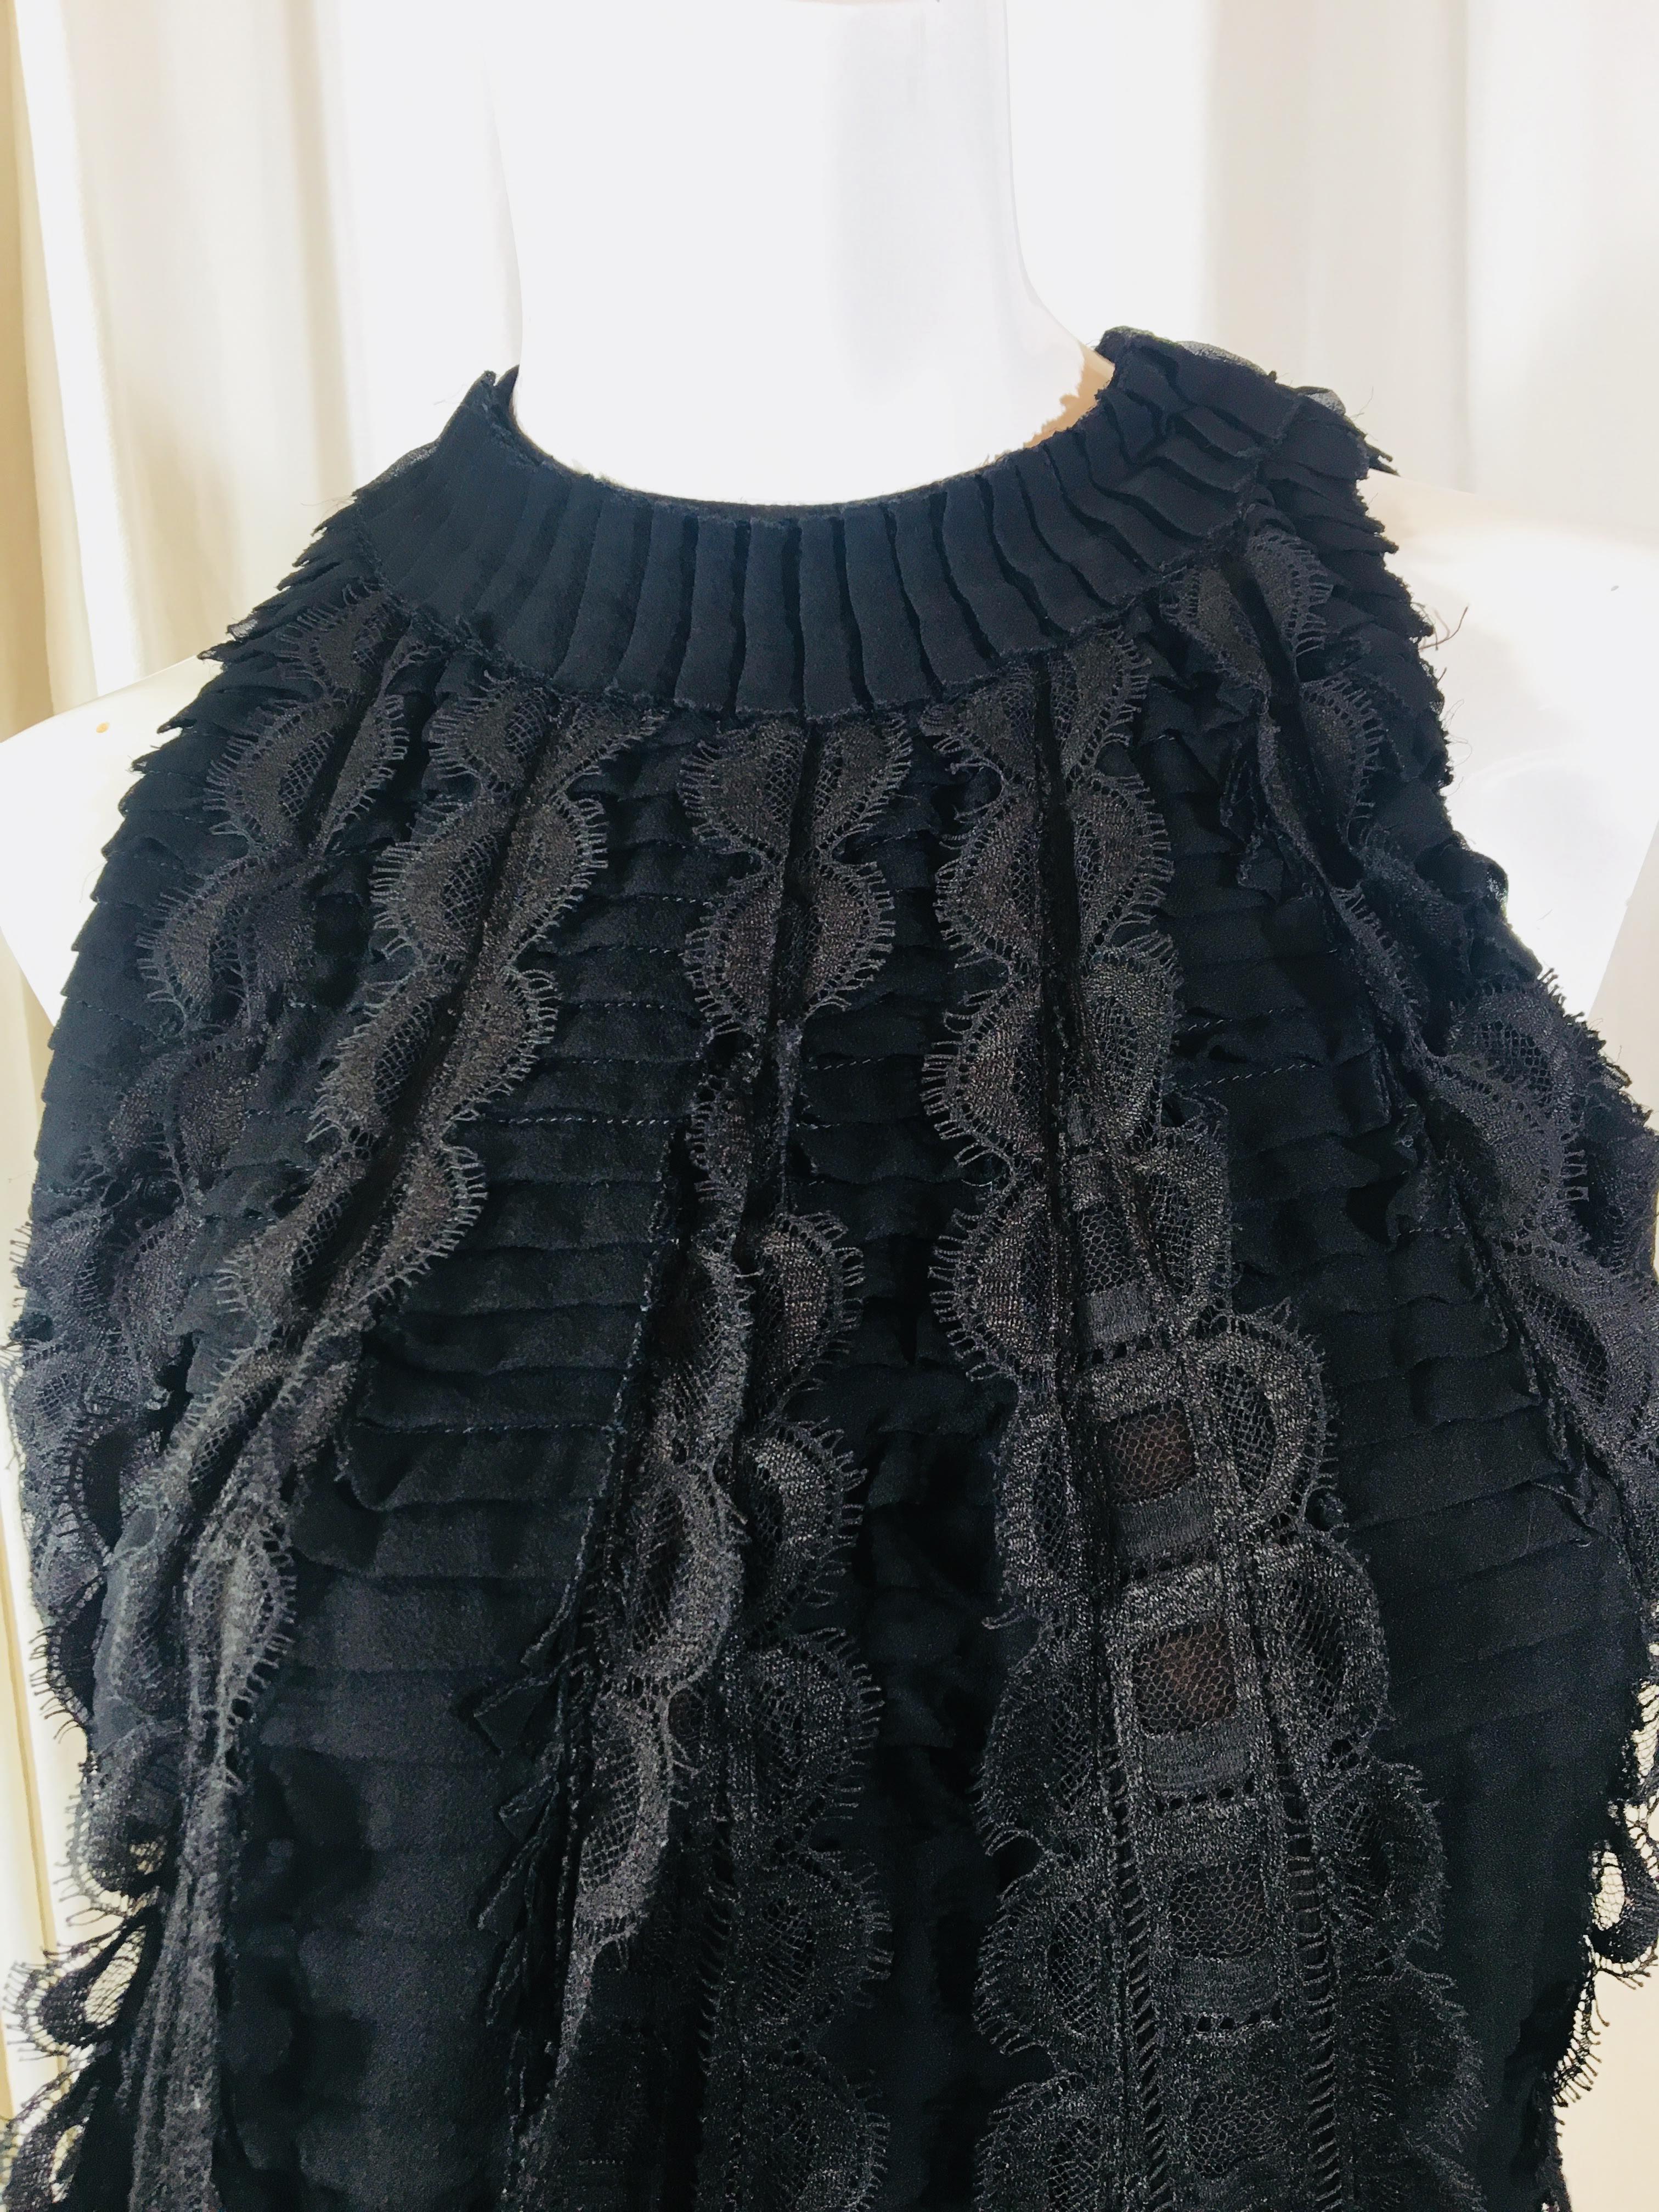 Carolina Herrera Sleeveless Lace Top in Black Cotton and High Collar. 